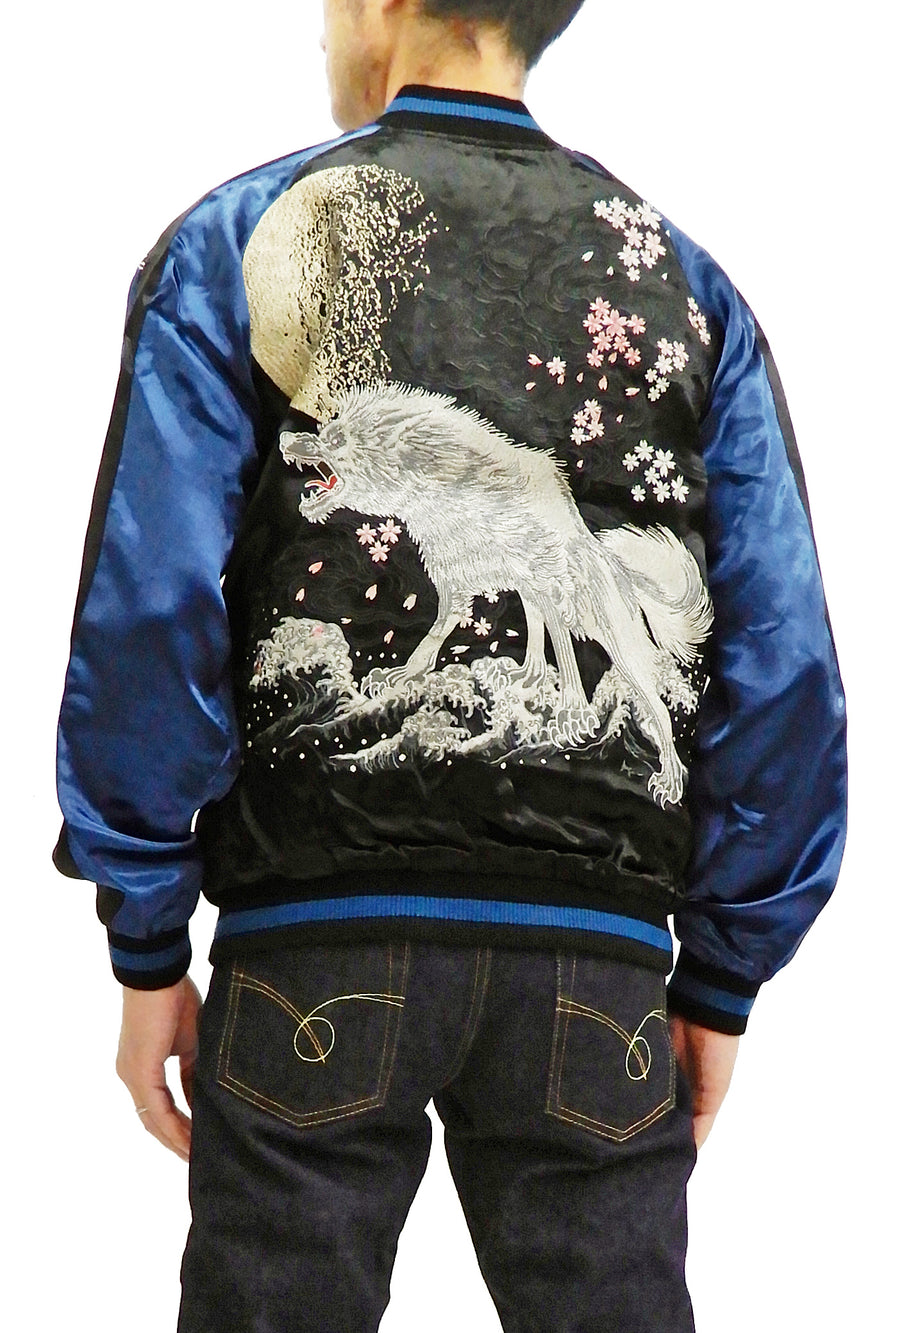 Satori Script Men's Japanese Souvenir Jacket Wolf with Moon Sukajan GSJR-025 Black/Dark-Blue